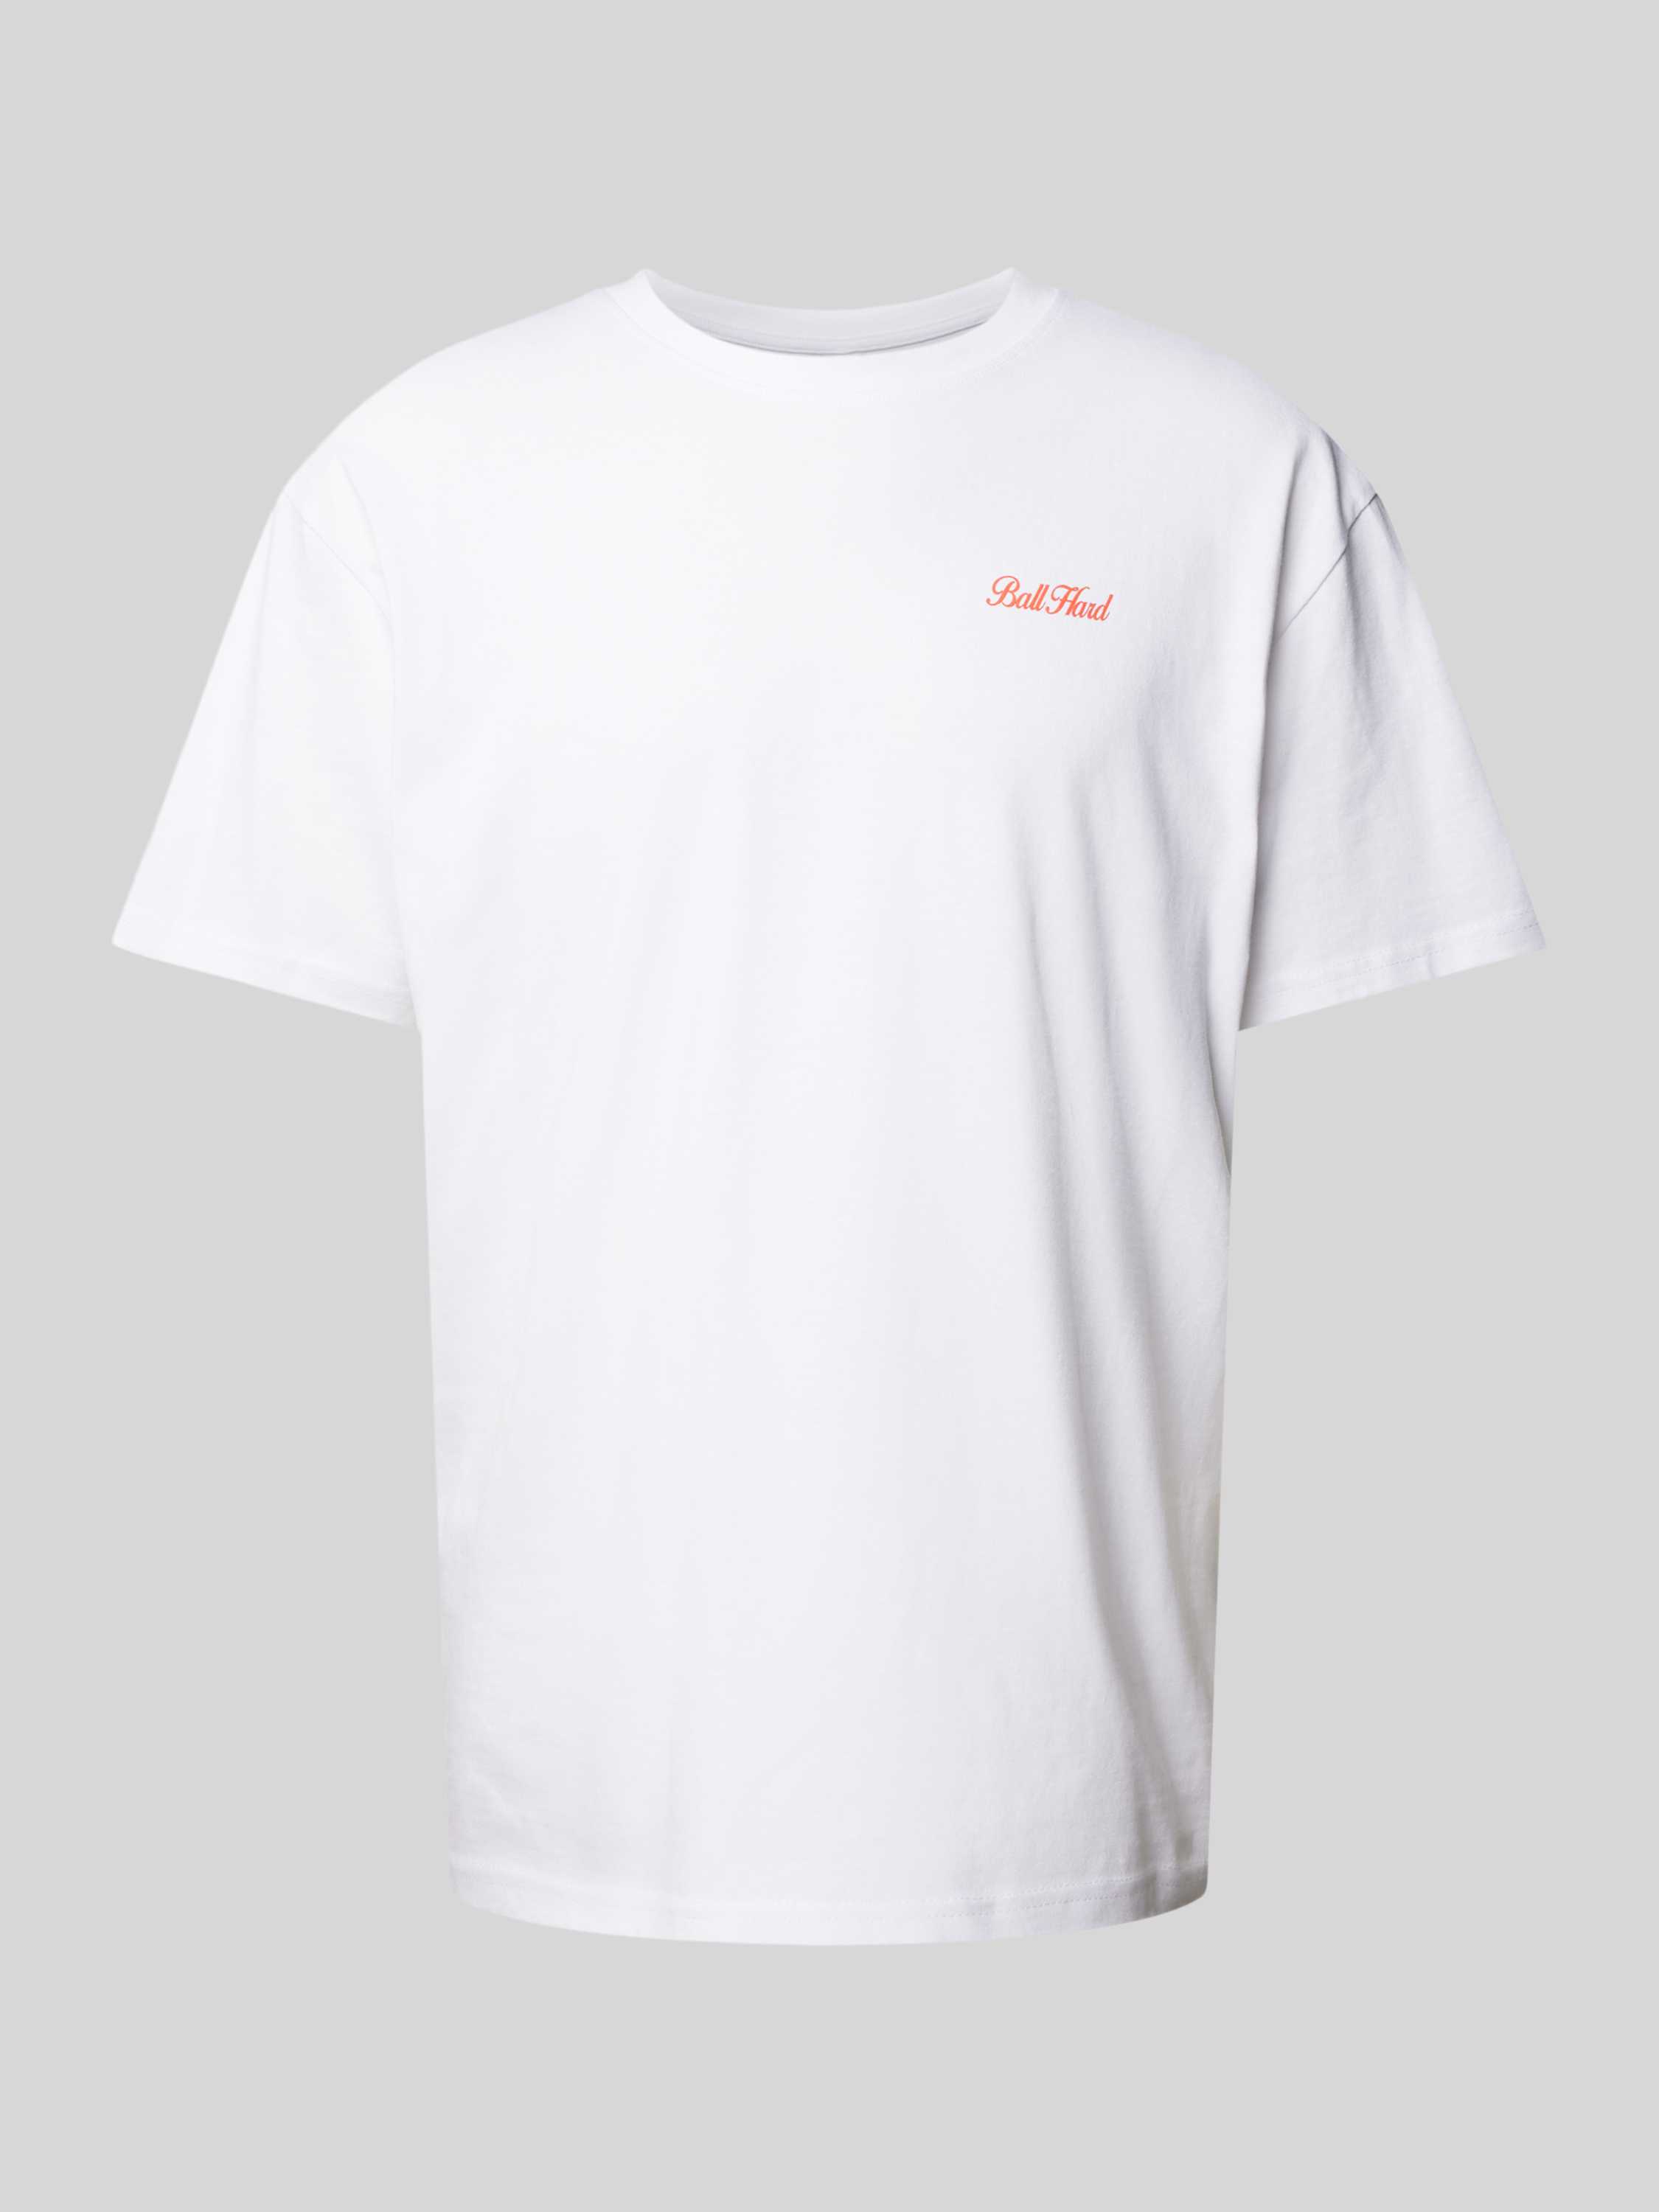 Mister tee Oversized T-shirt met statementprint model 'Ball Hard'